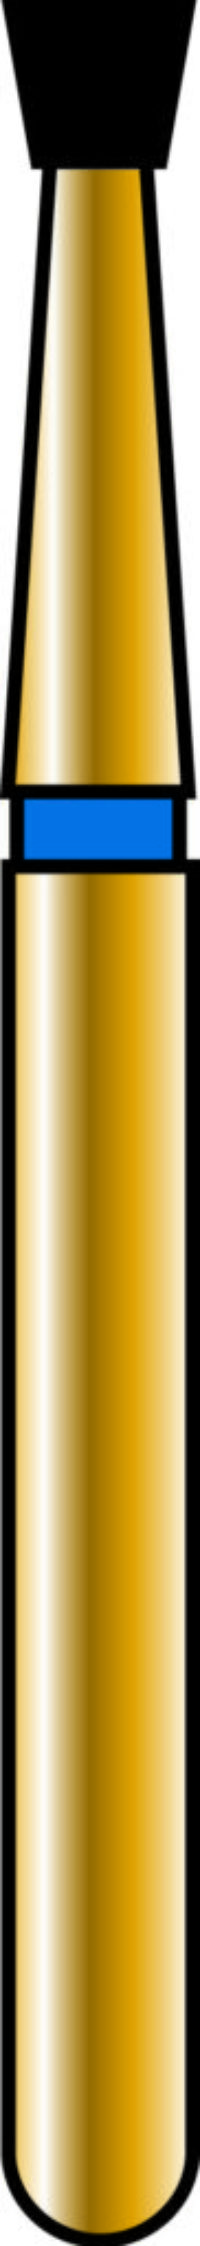 Inverted Cone 16-1.4mm Gold Diamond Bur - Coarse Grit